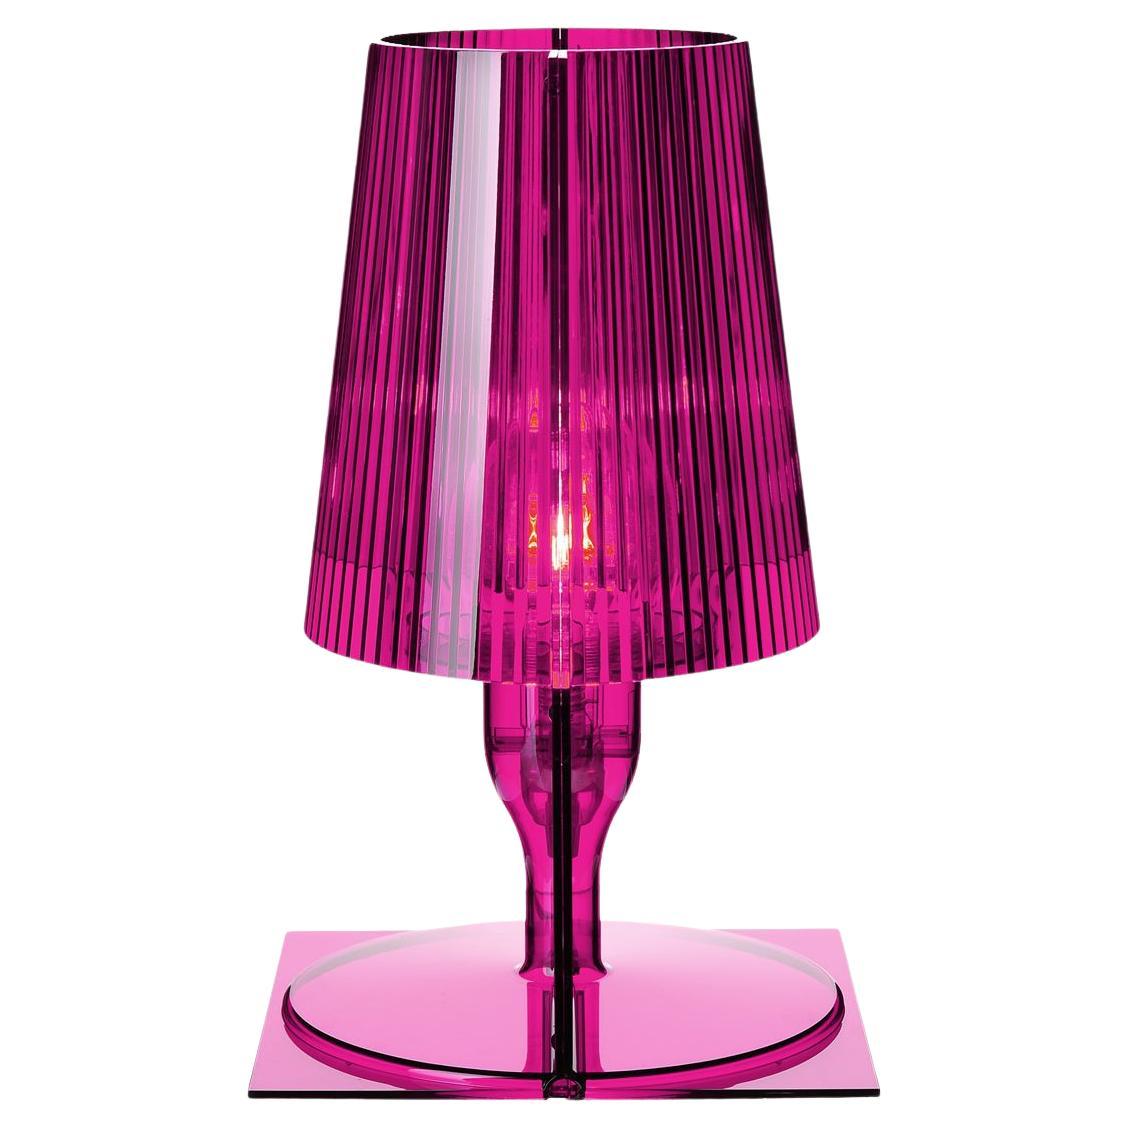 Kartell Take Lamp in Pink by Ferruccio Laviani